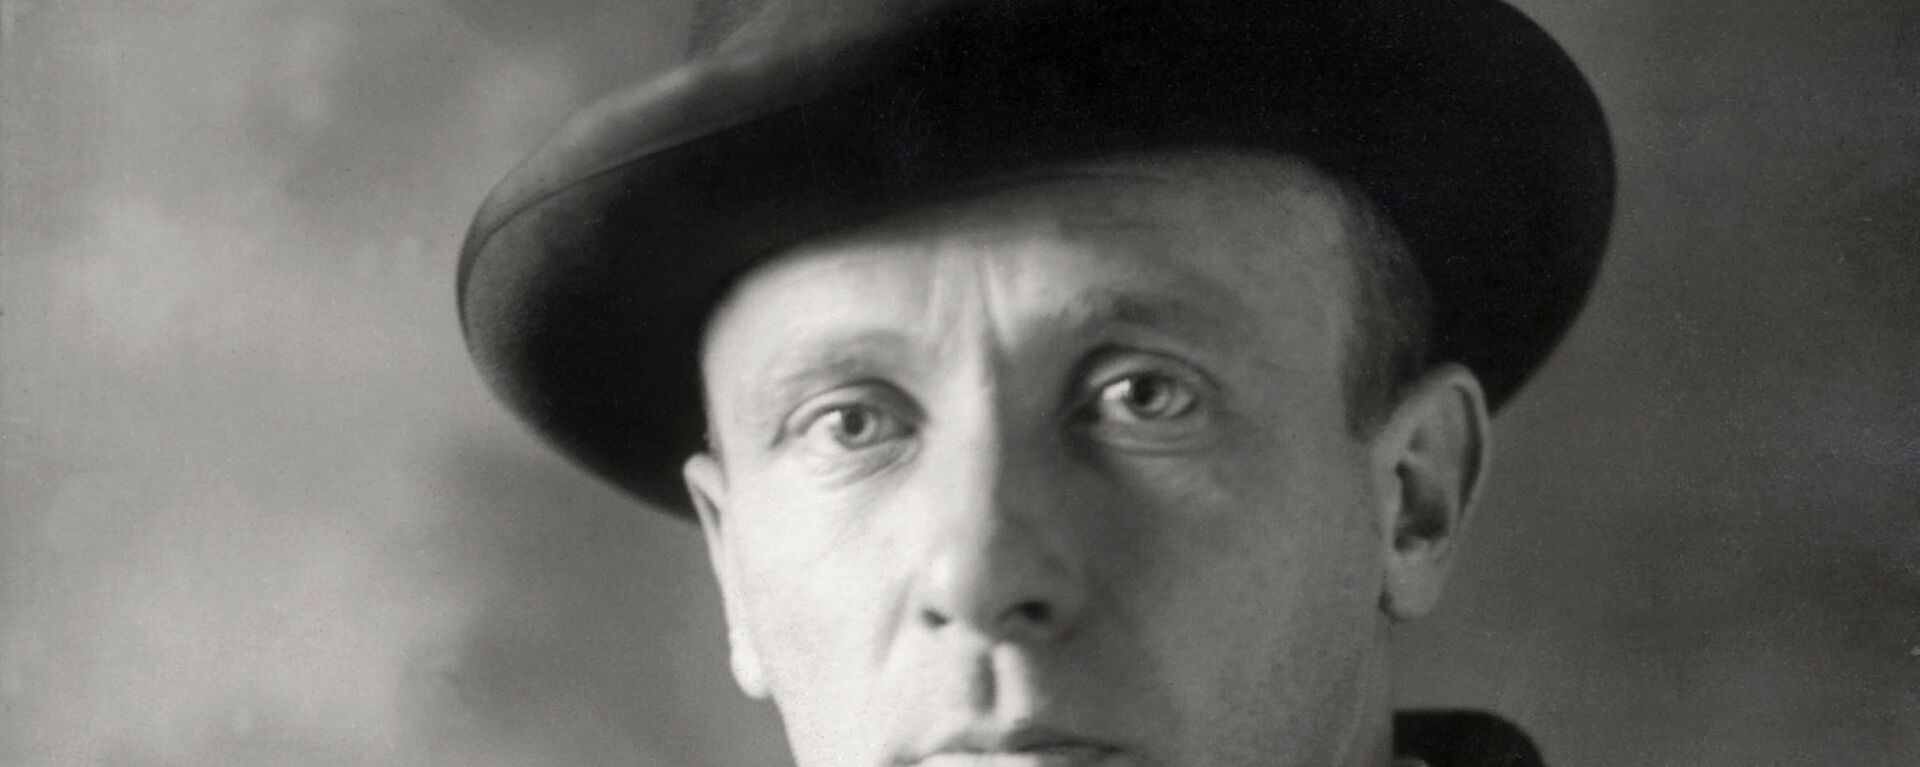 Mihail Bulgakov - Sputnik Srbija, 1920, 30.05.2021